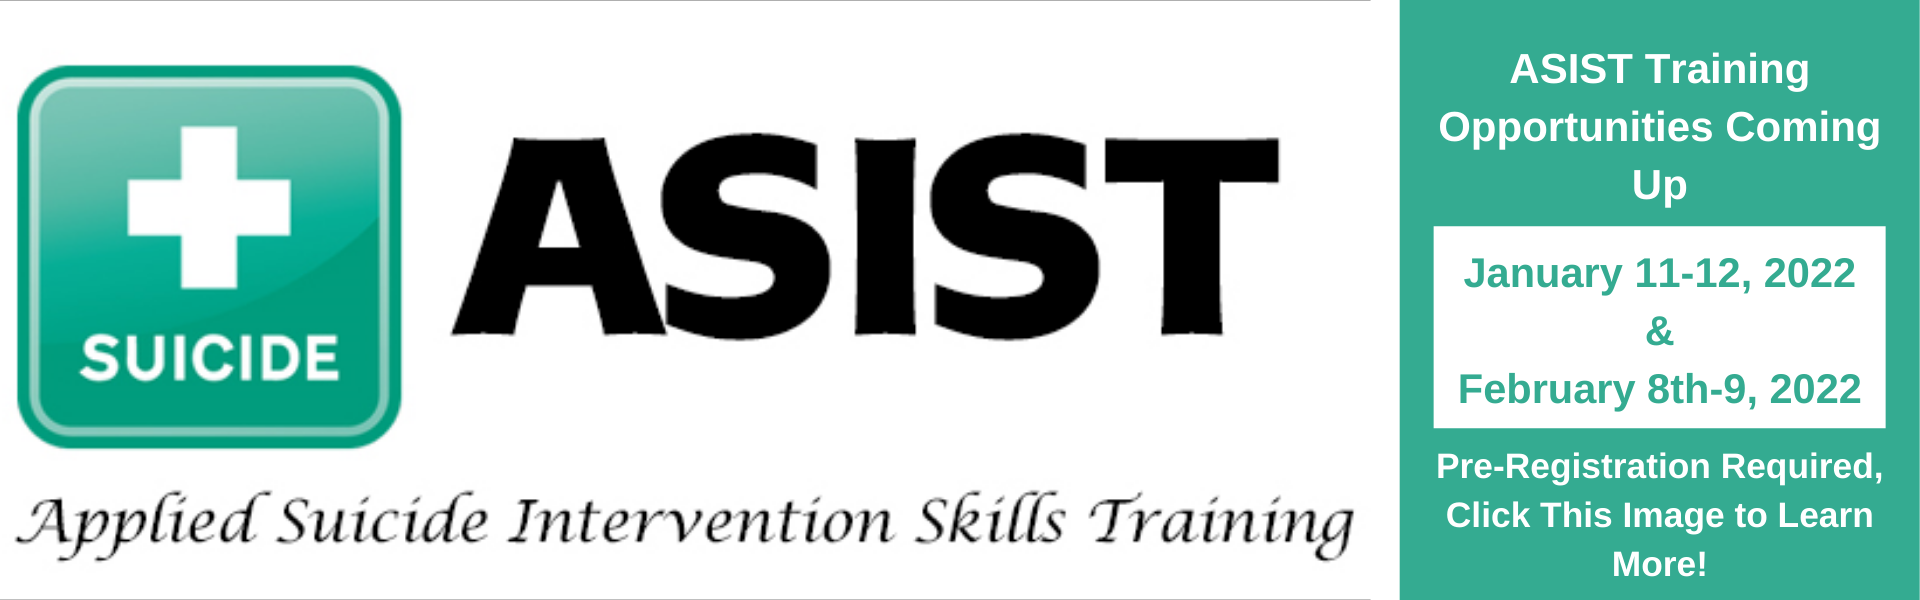 ASIST Training Opportunity - Sept 20-21 - CMHA PEI